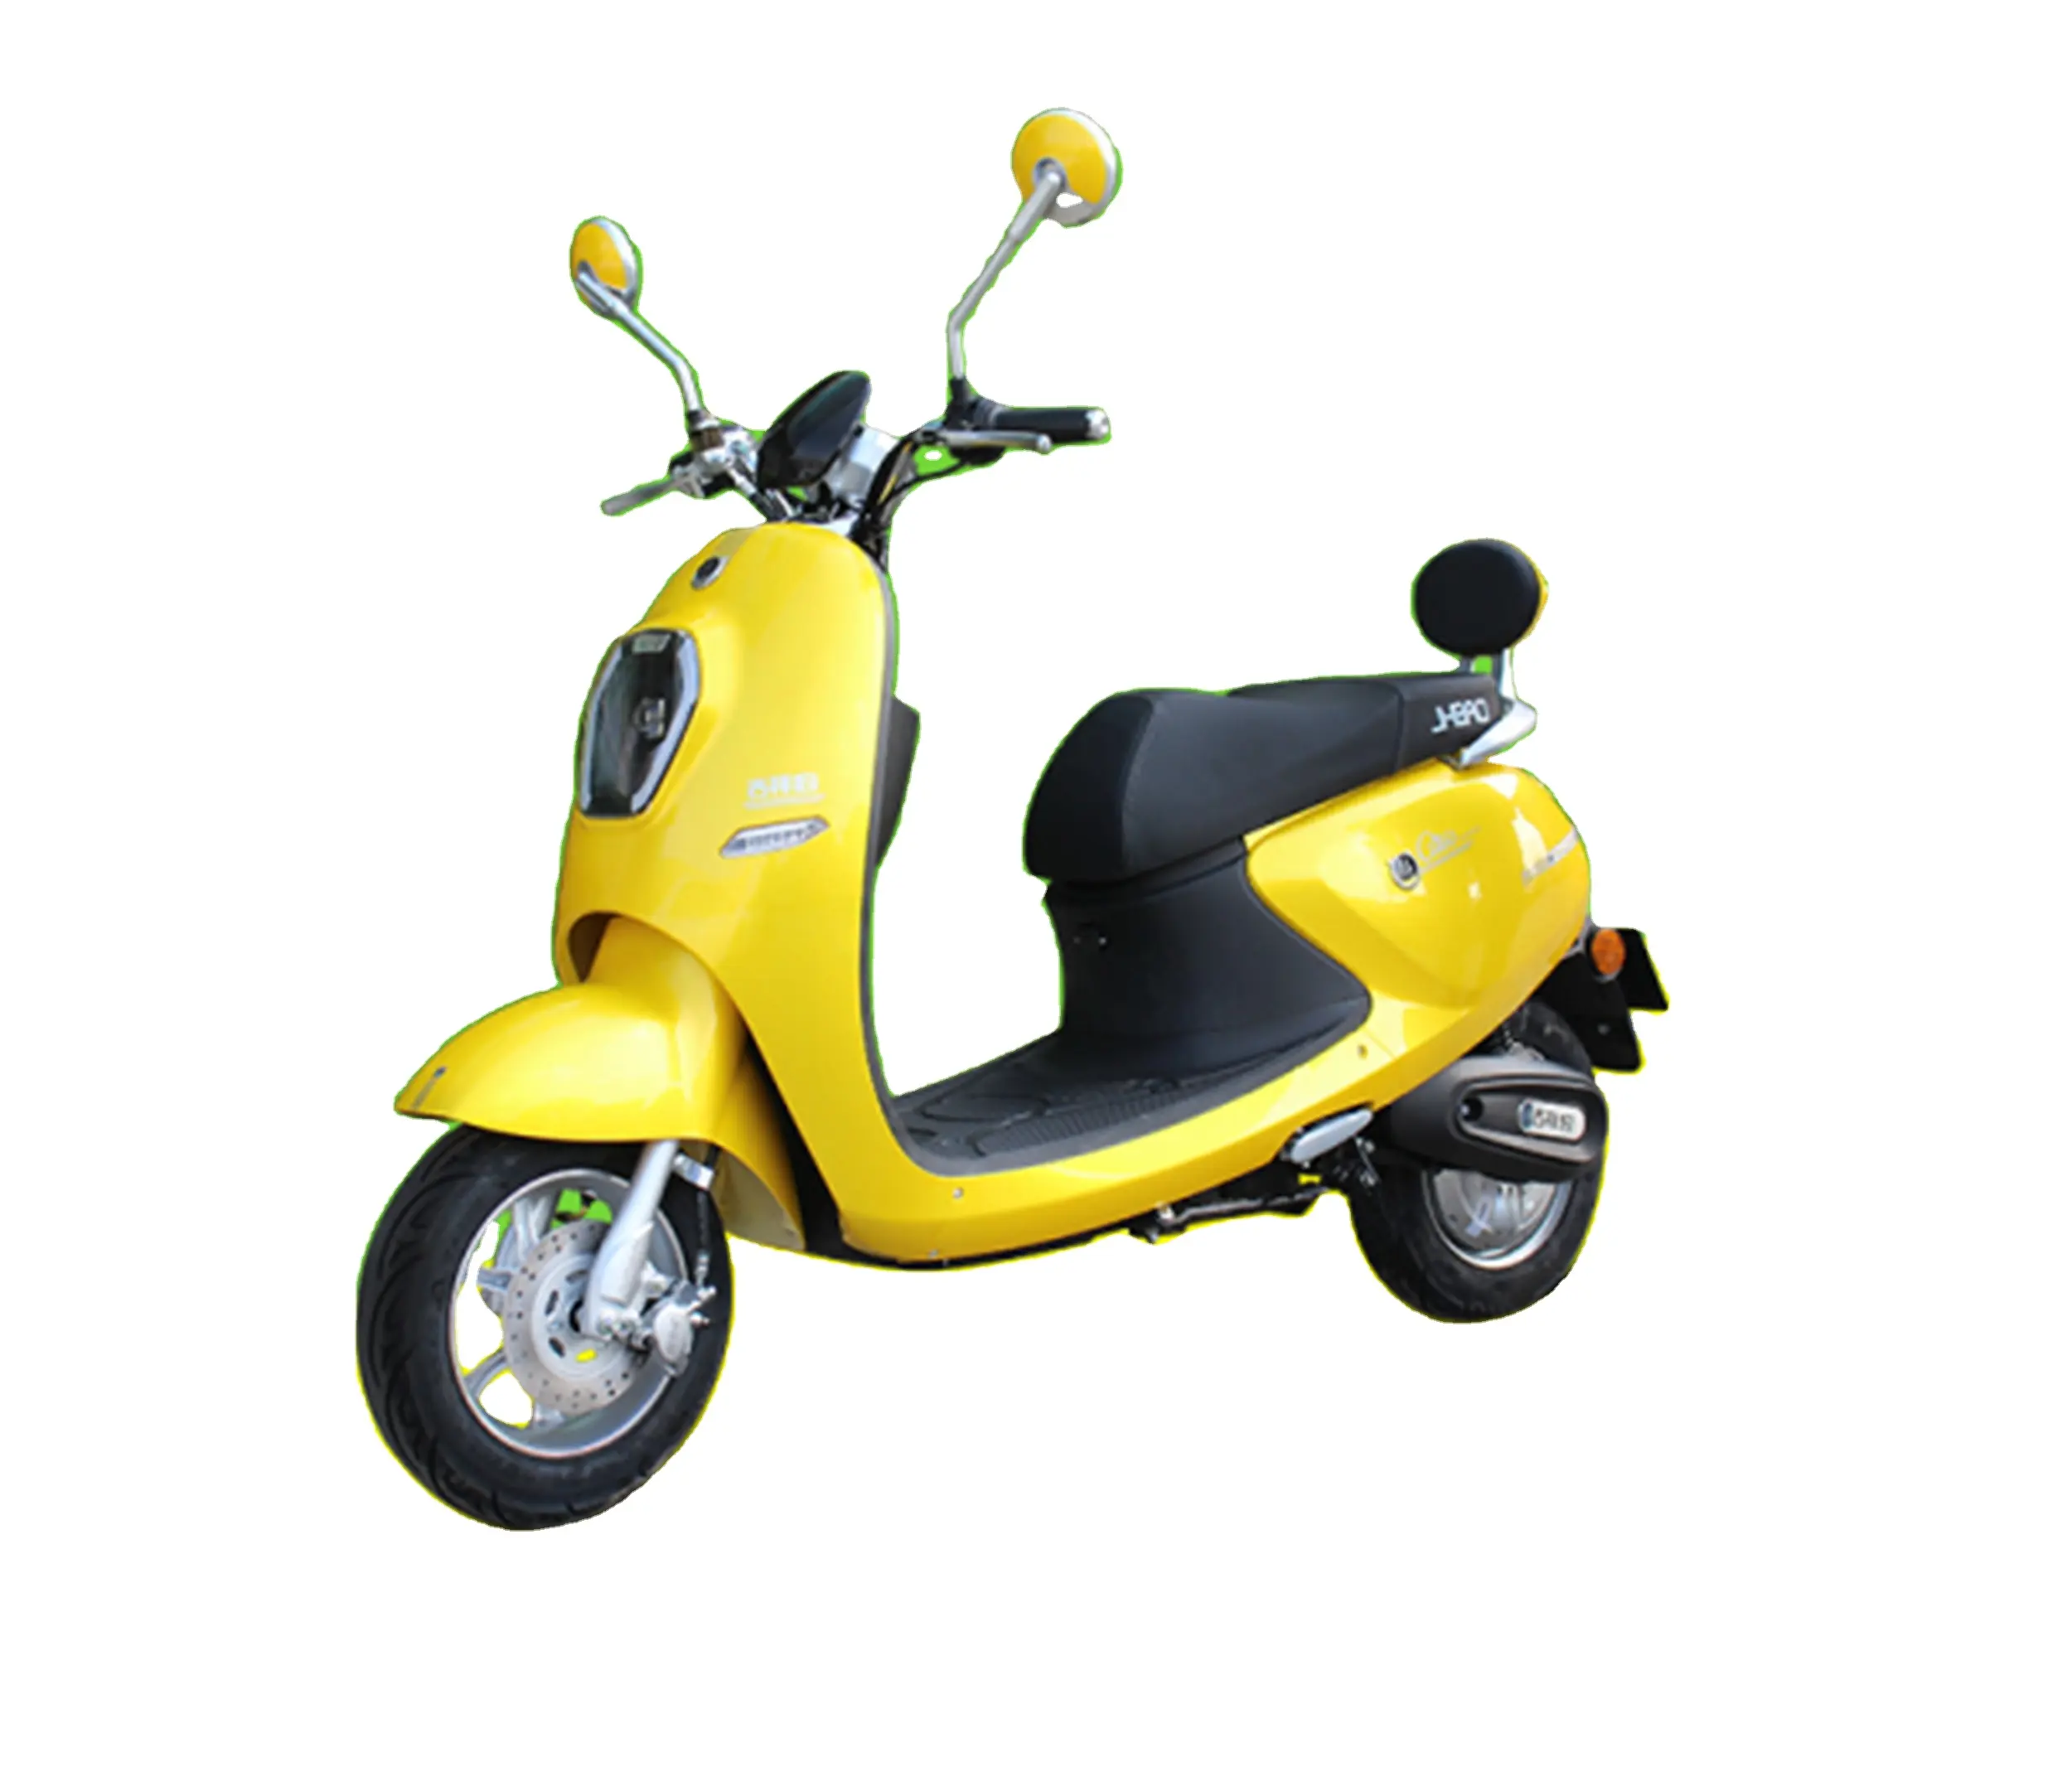 Yeni model e-scooter 2 tekerlekli elektrikli motosiklet yeni model elektrikli motosiklet çin'de yapılan